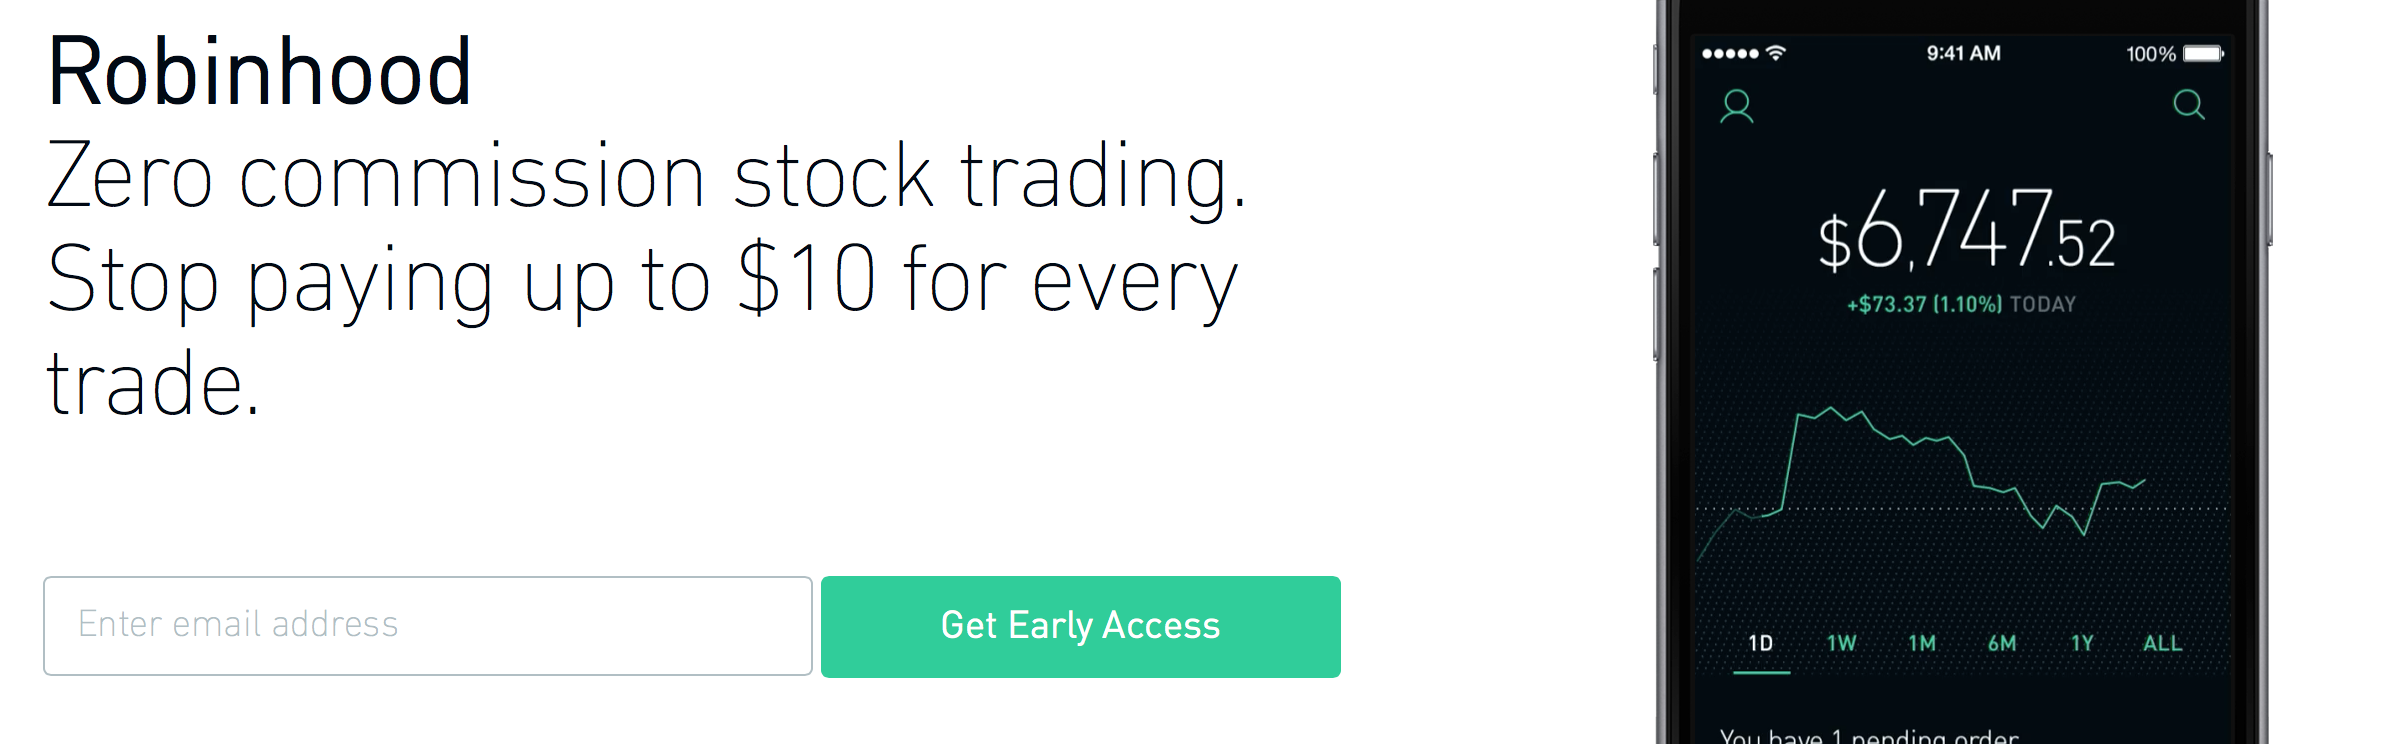 Robinhood Stock Trading App Review